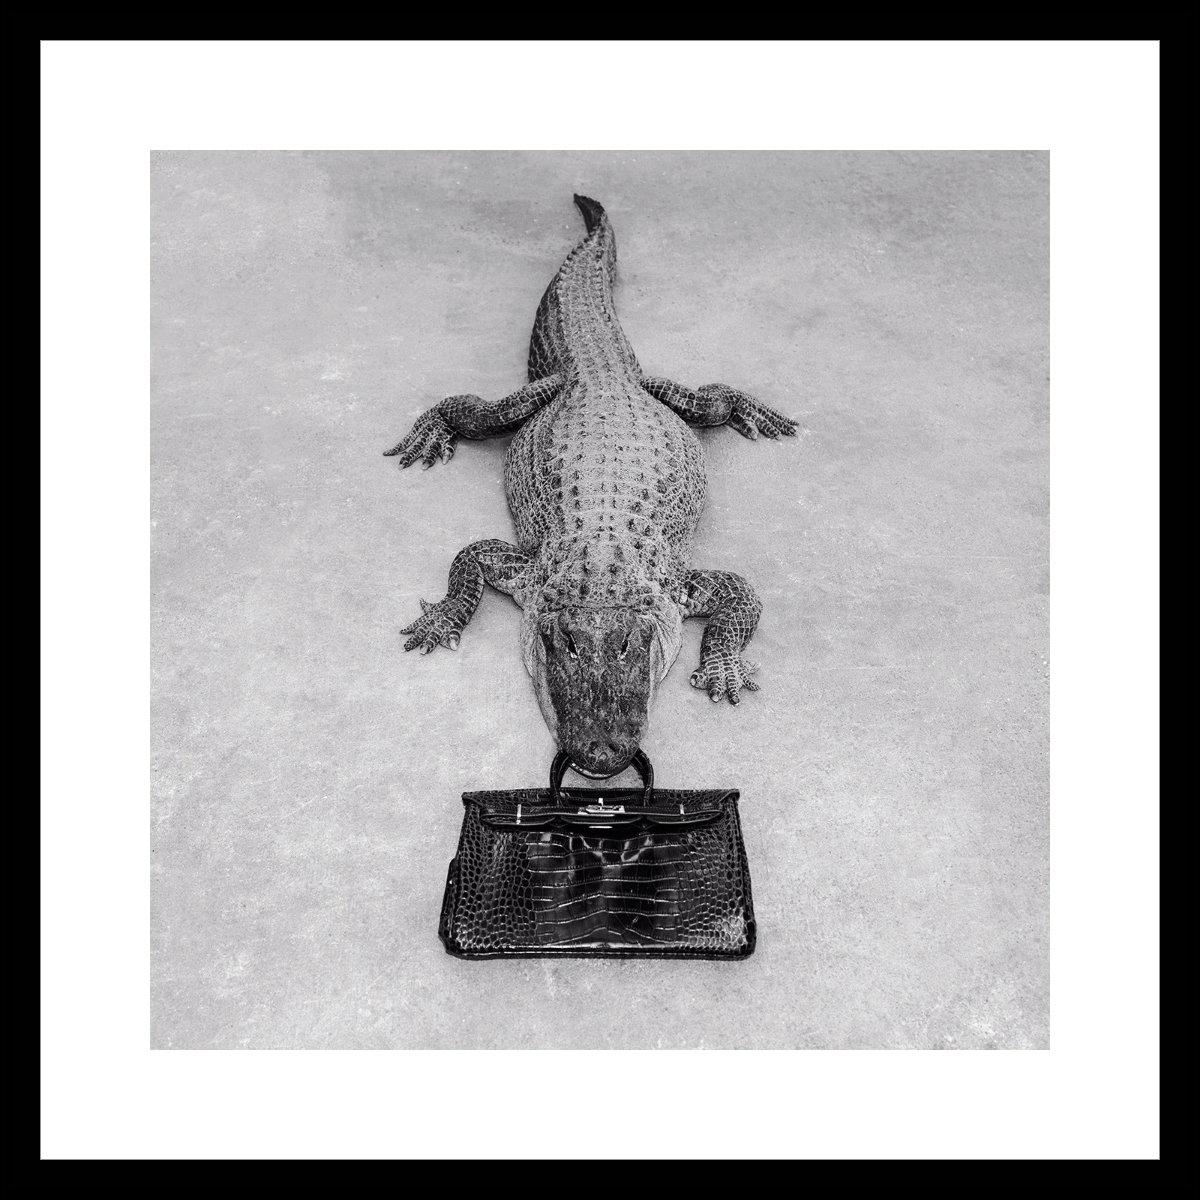 Tyler Shields - Gator Birkin Monochrome, Fotografie 2014, Nachgedruckt 1